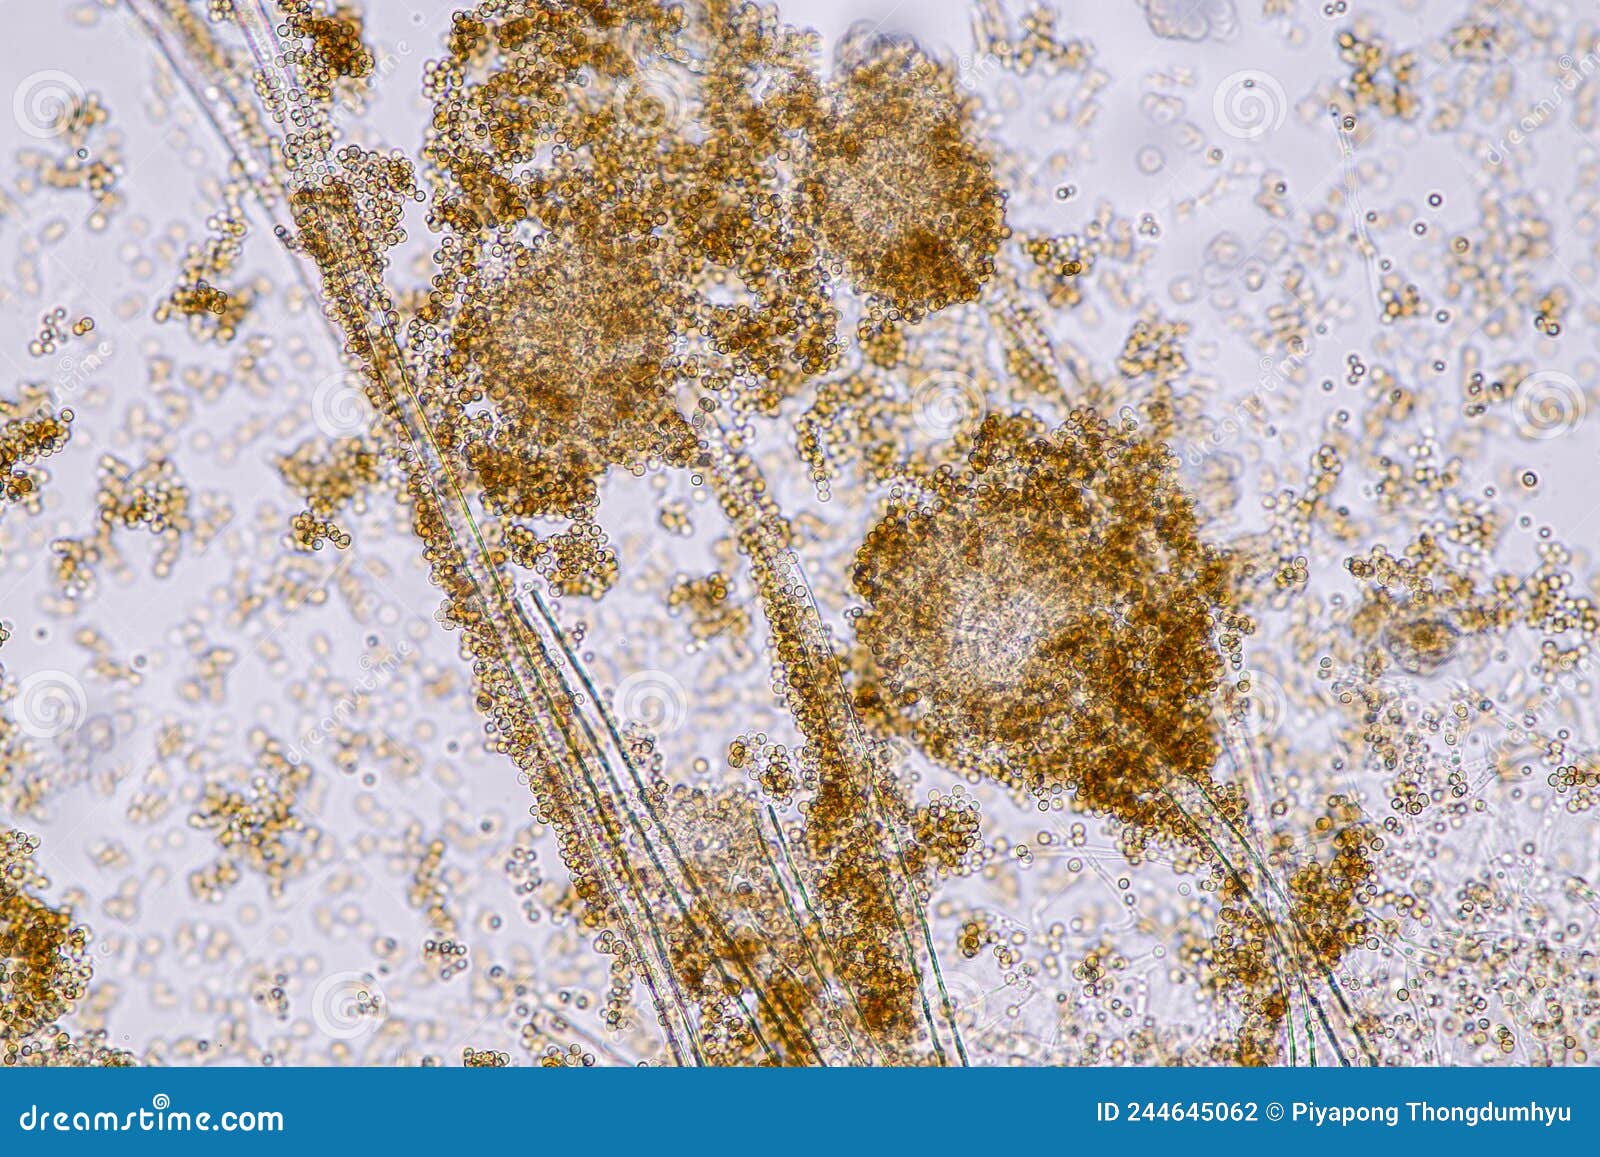 Aspergillus Niger and Aspergillus Oryzae Mold Under Microscope. Stock ...